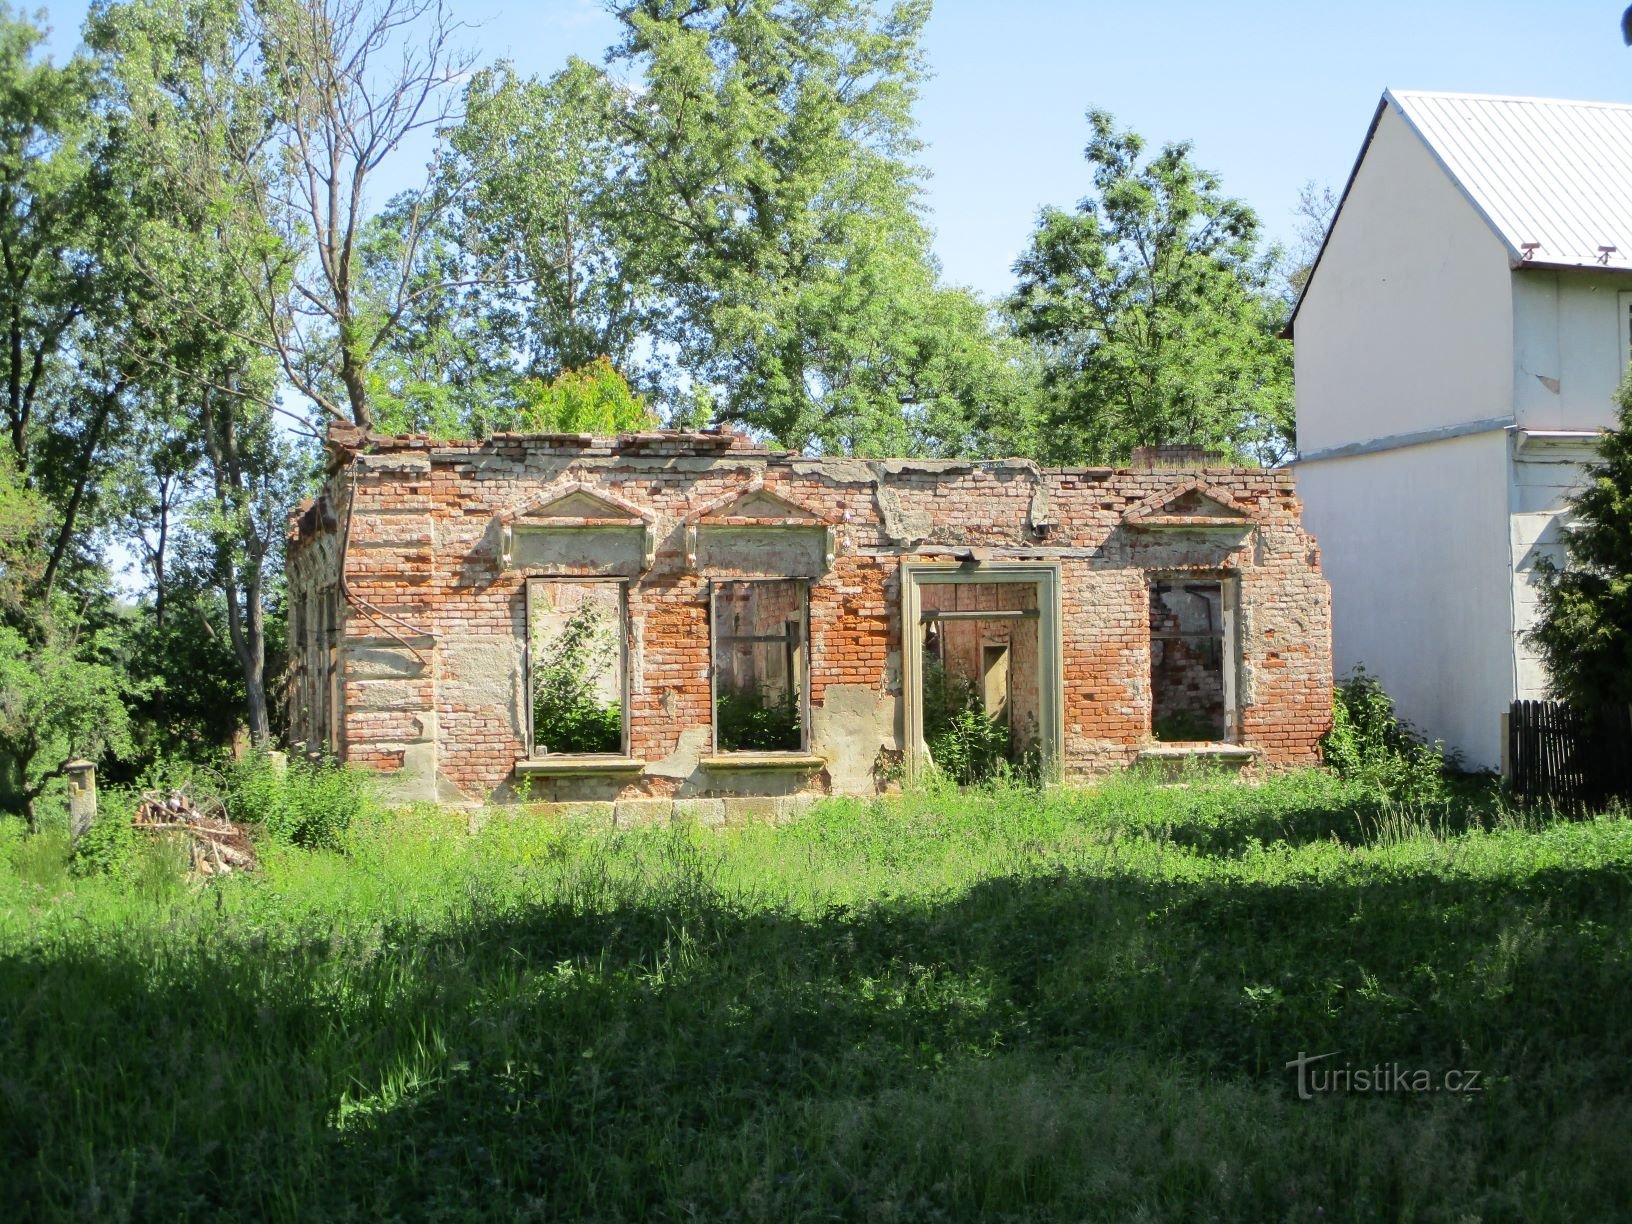 Ruïnes van de oorspronkelijke nr. 31 (Starý Ples, 1.6.2020 juni XNUMX)